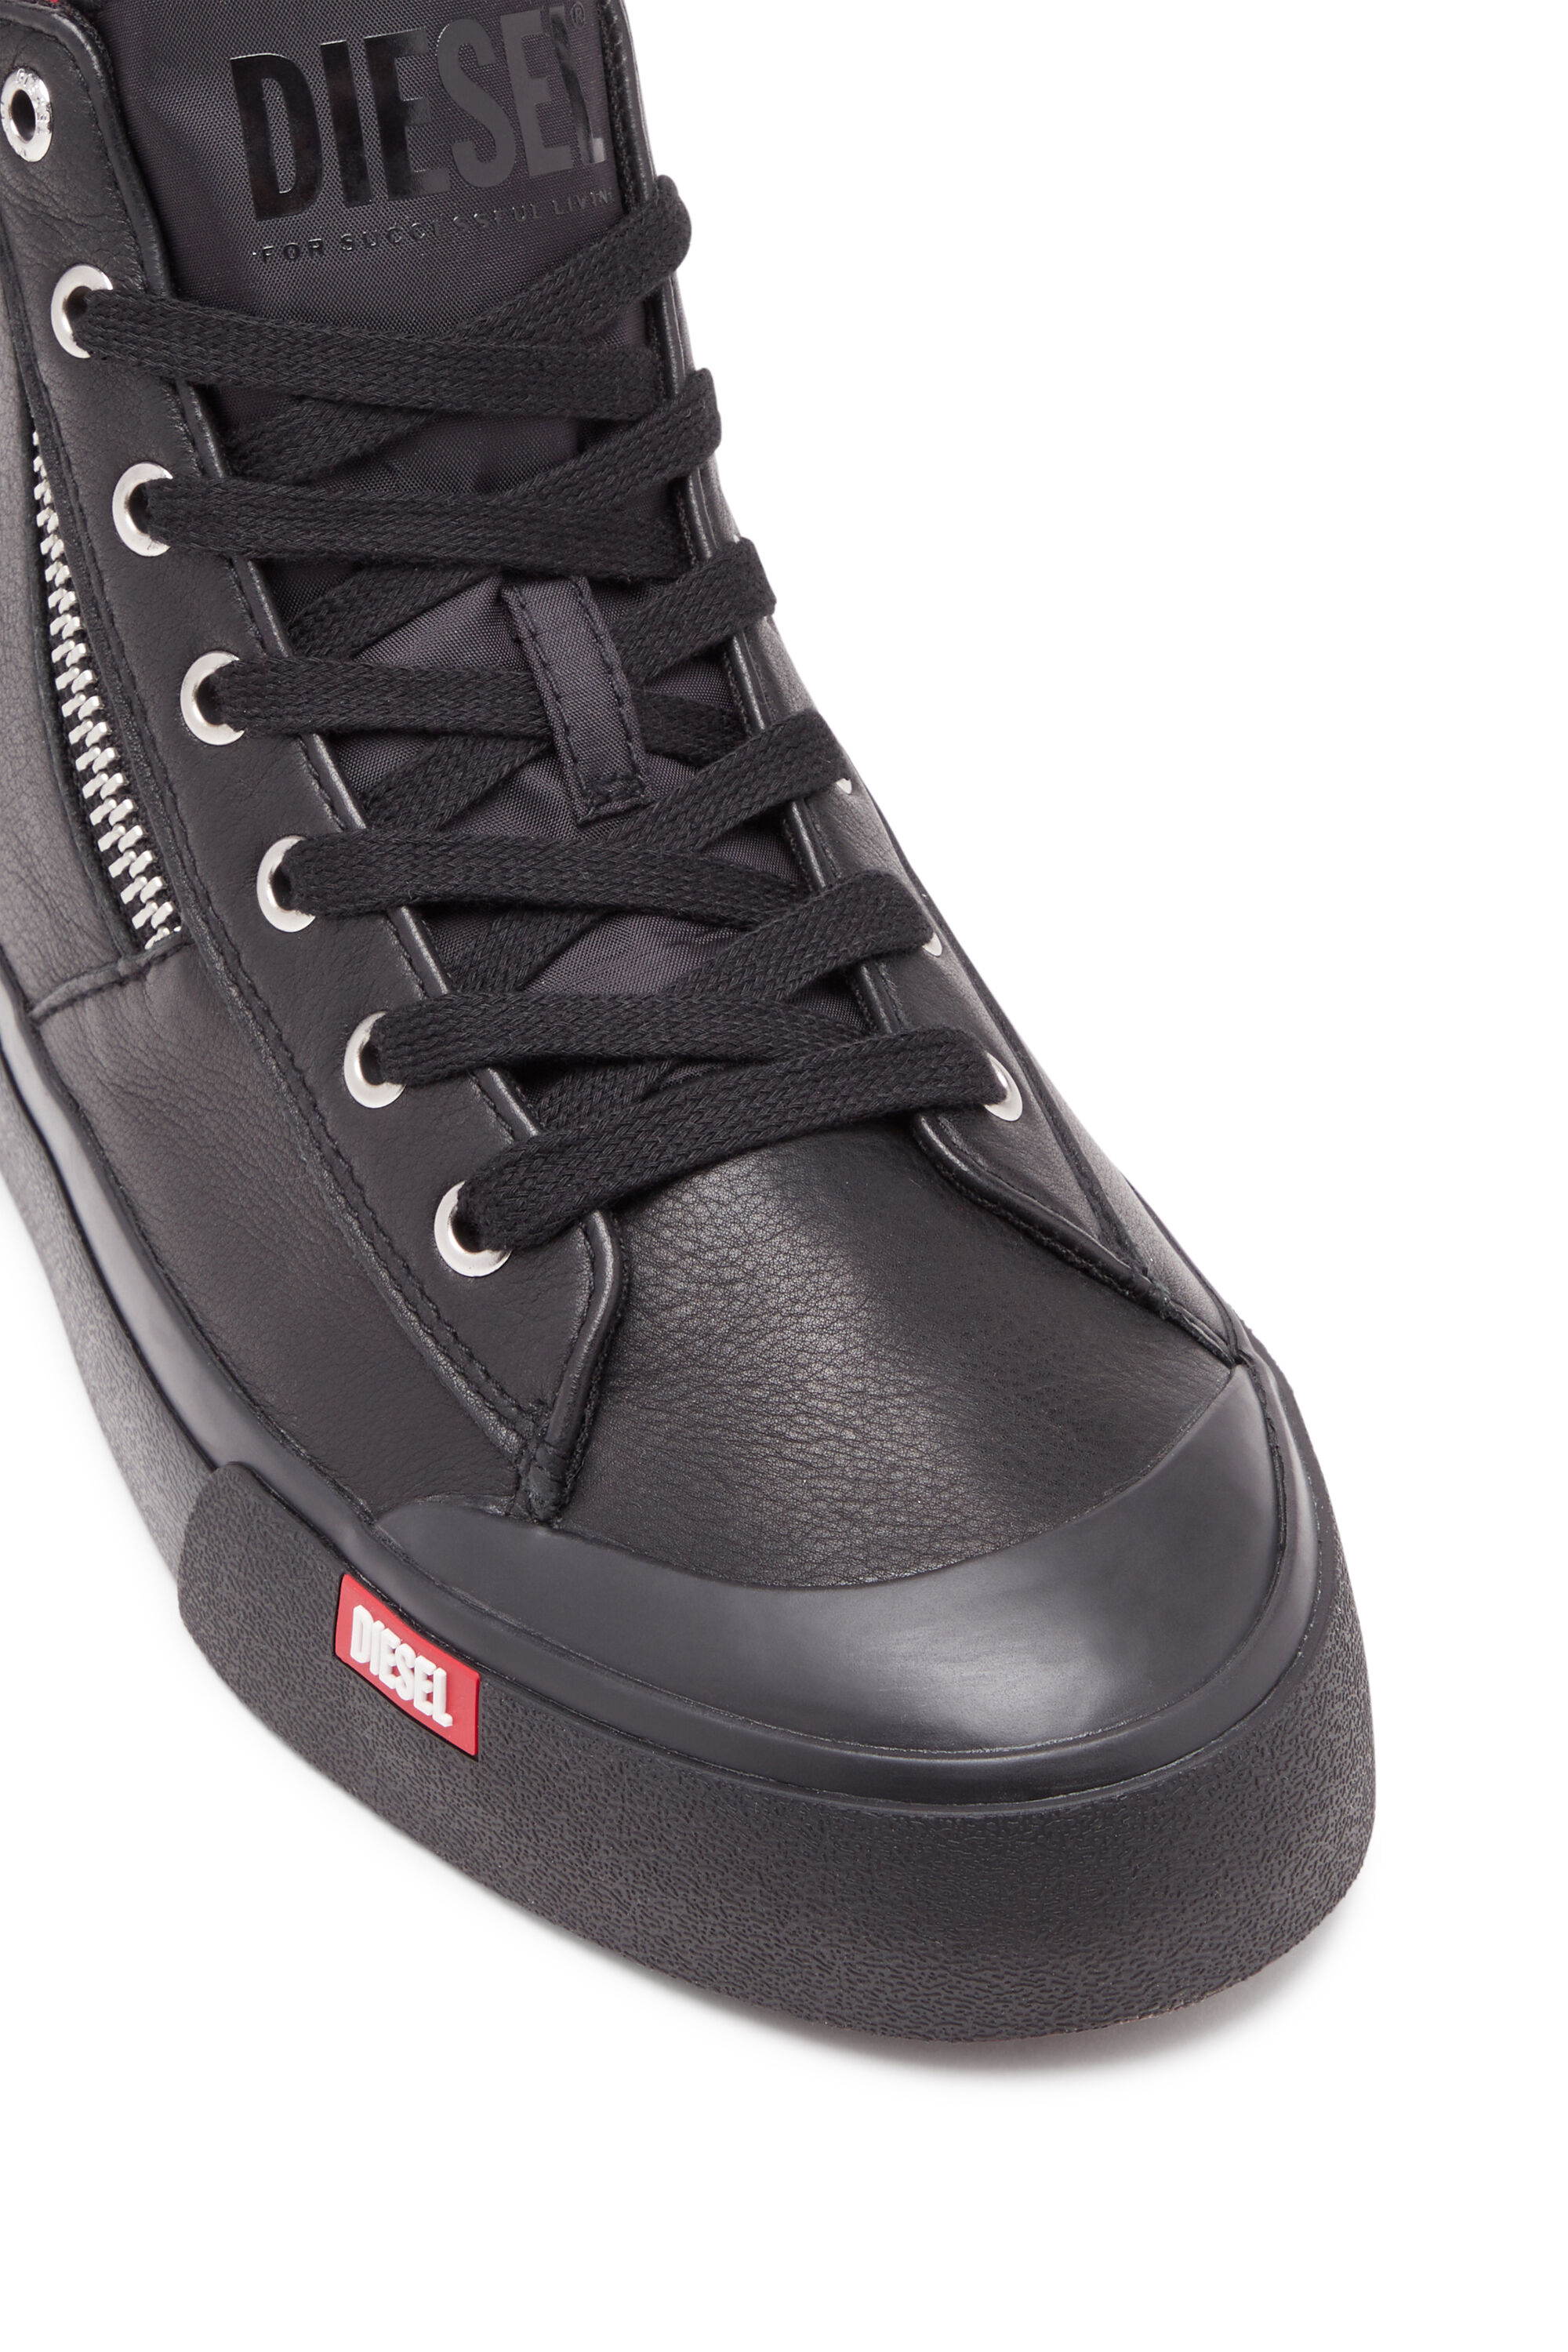 S-ATHOS ZIP S-Athos Zip - High-top sneakers in premium leather ...